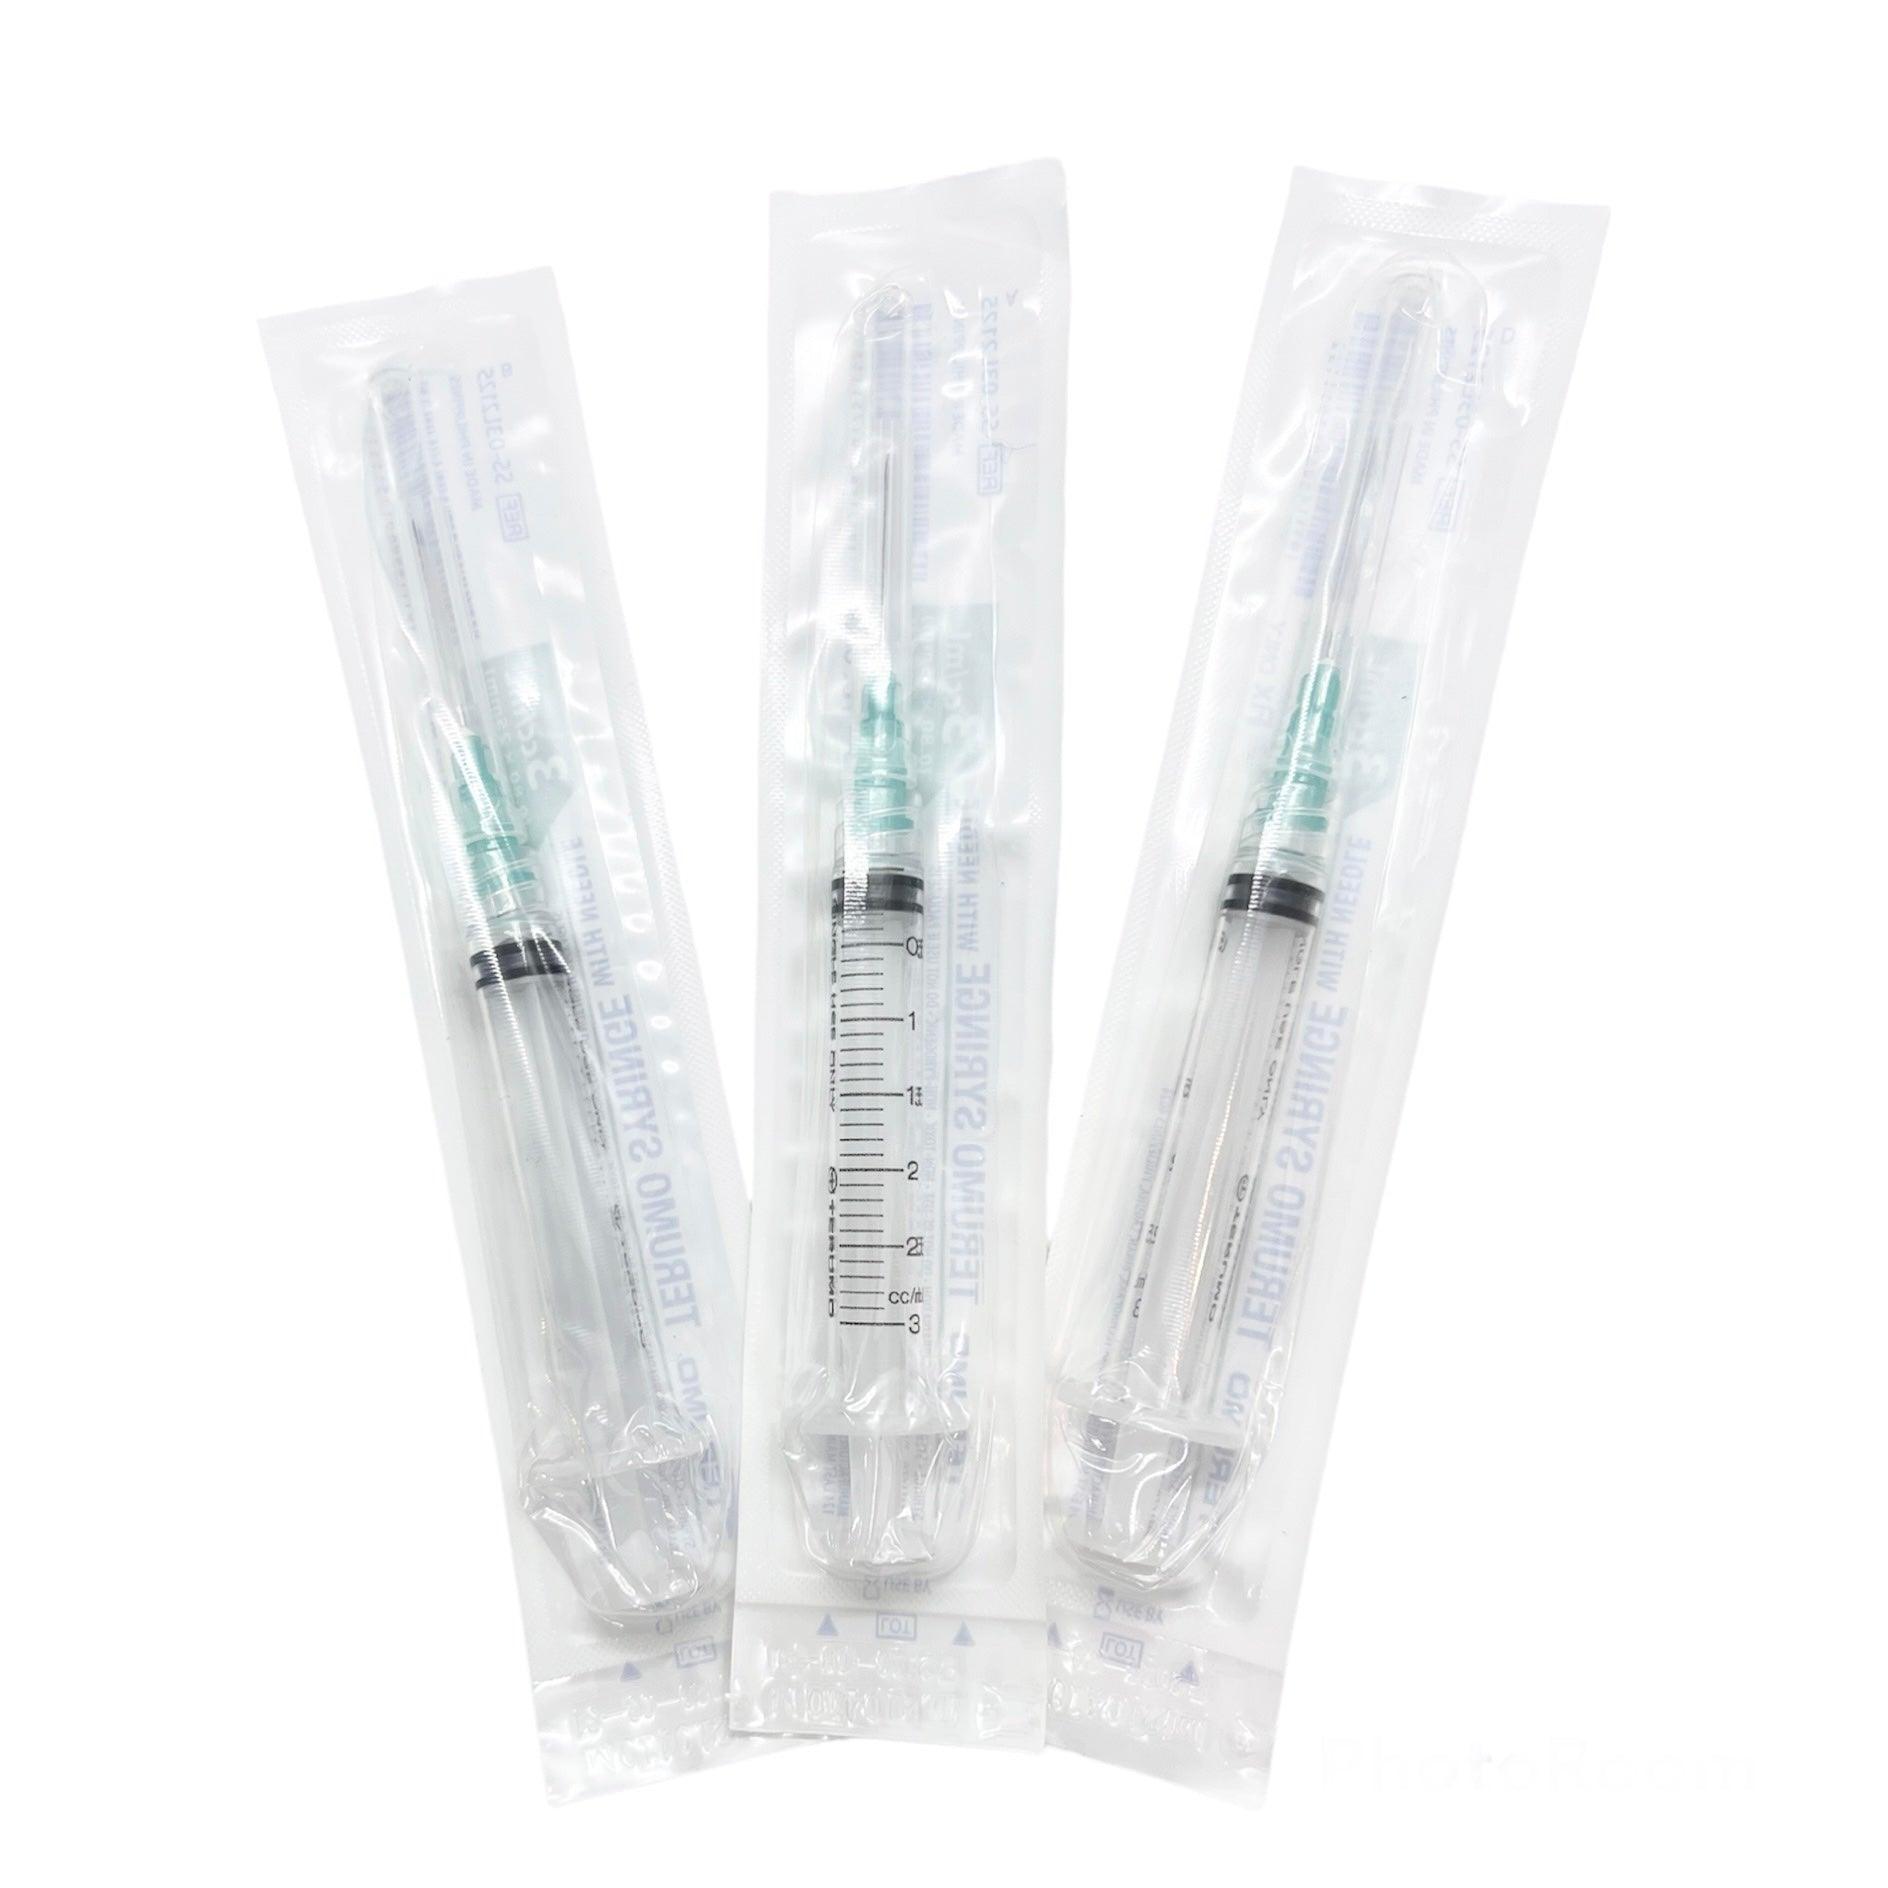 3mL | 21G x 1 1/2" - Terumo SS-03L2138 Syringe & Needle Combination | 100 per Box